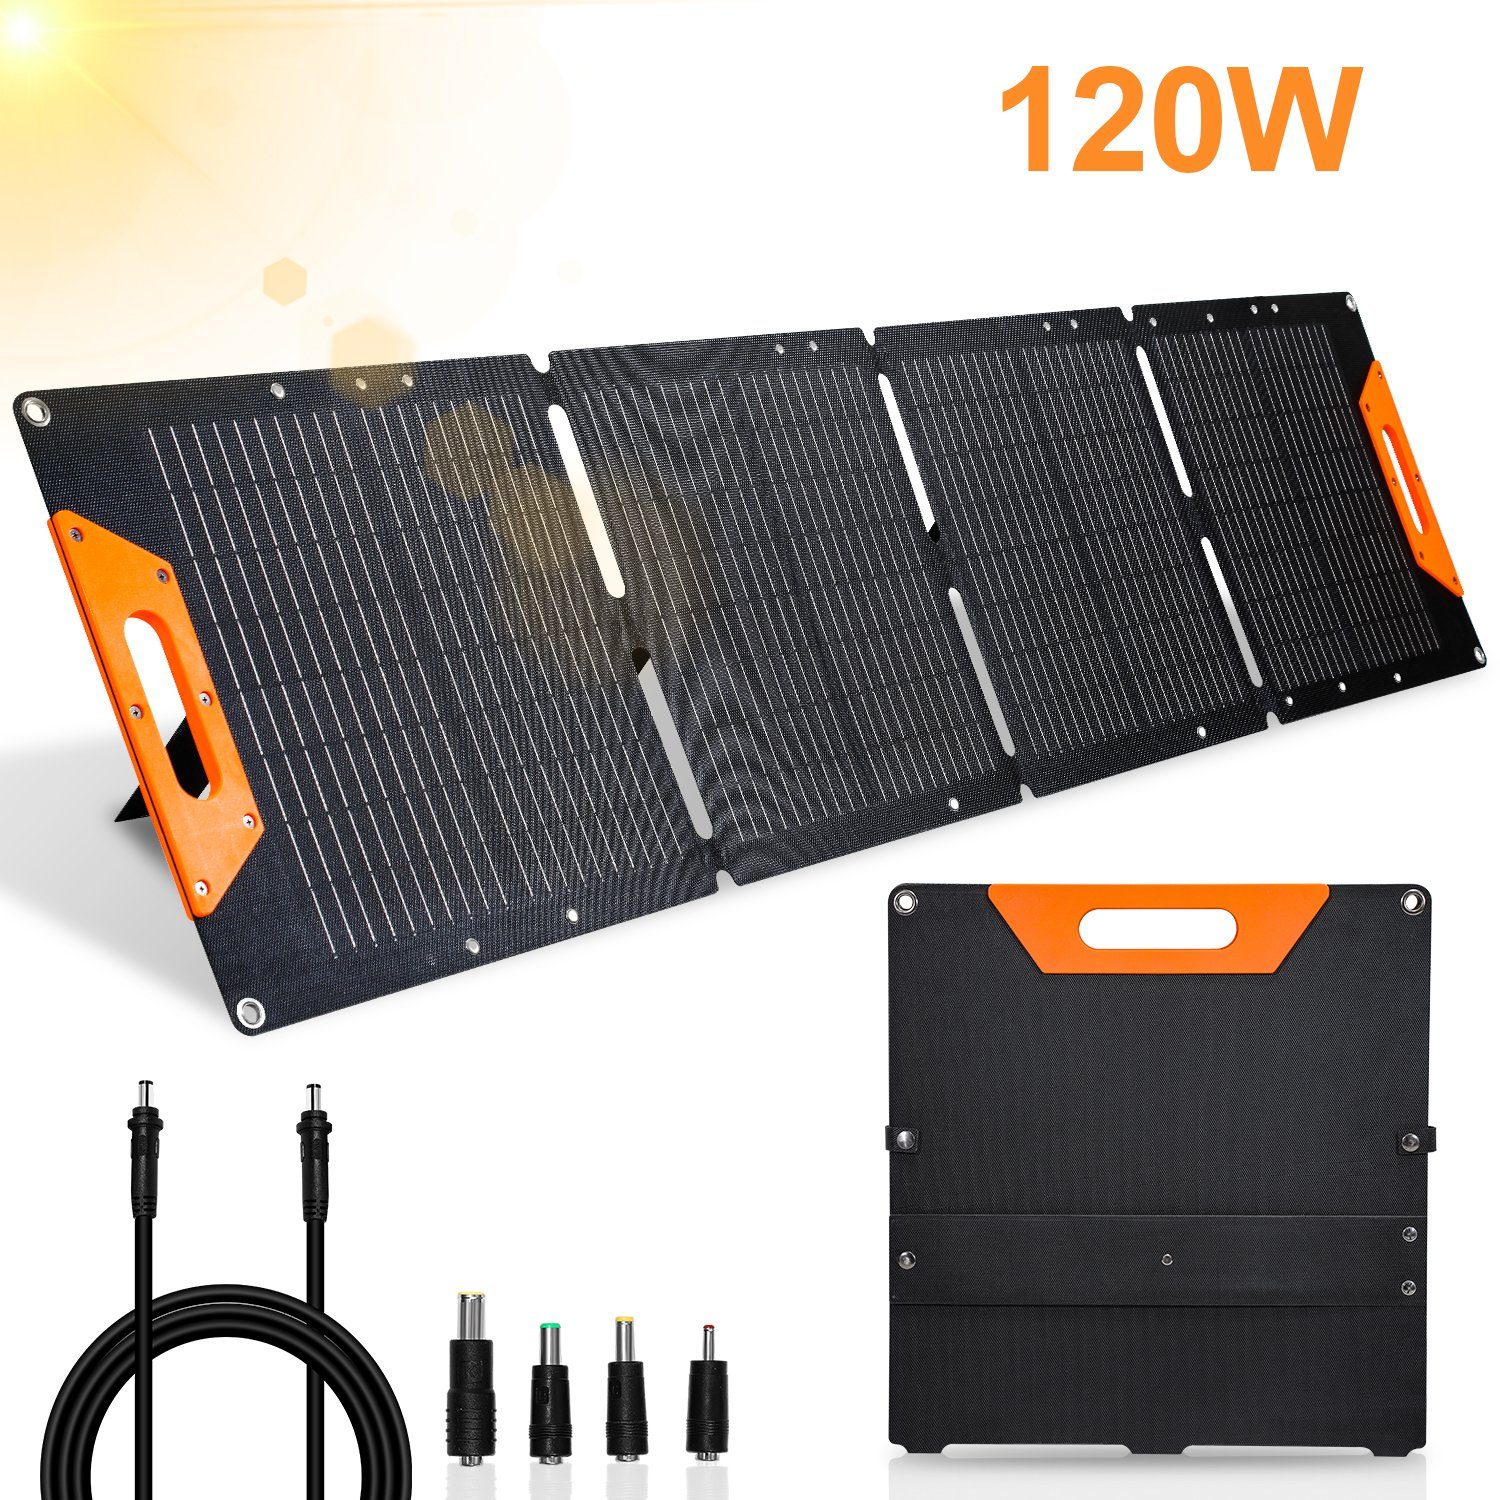 Randaco Solarmodul Solarpanel Faltbar 120W für Powerstation Powerbank Solarladegerät, 120,00 W